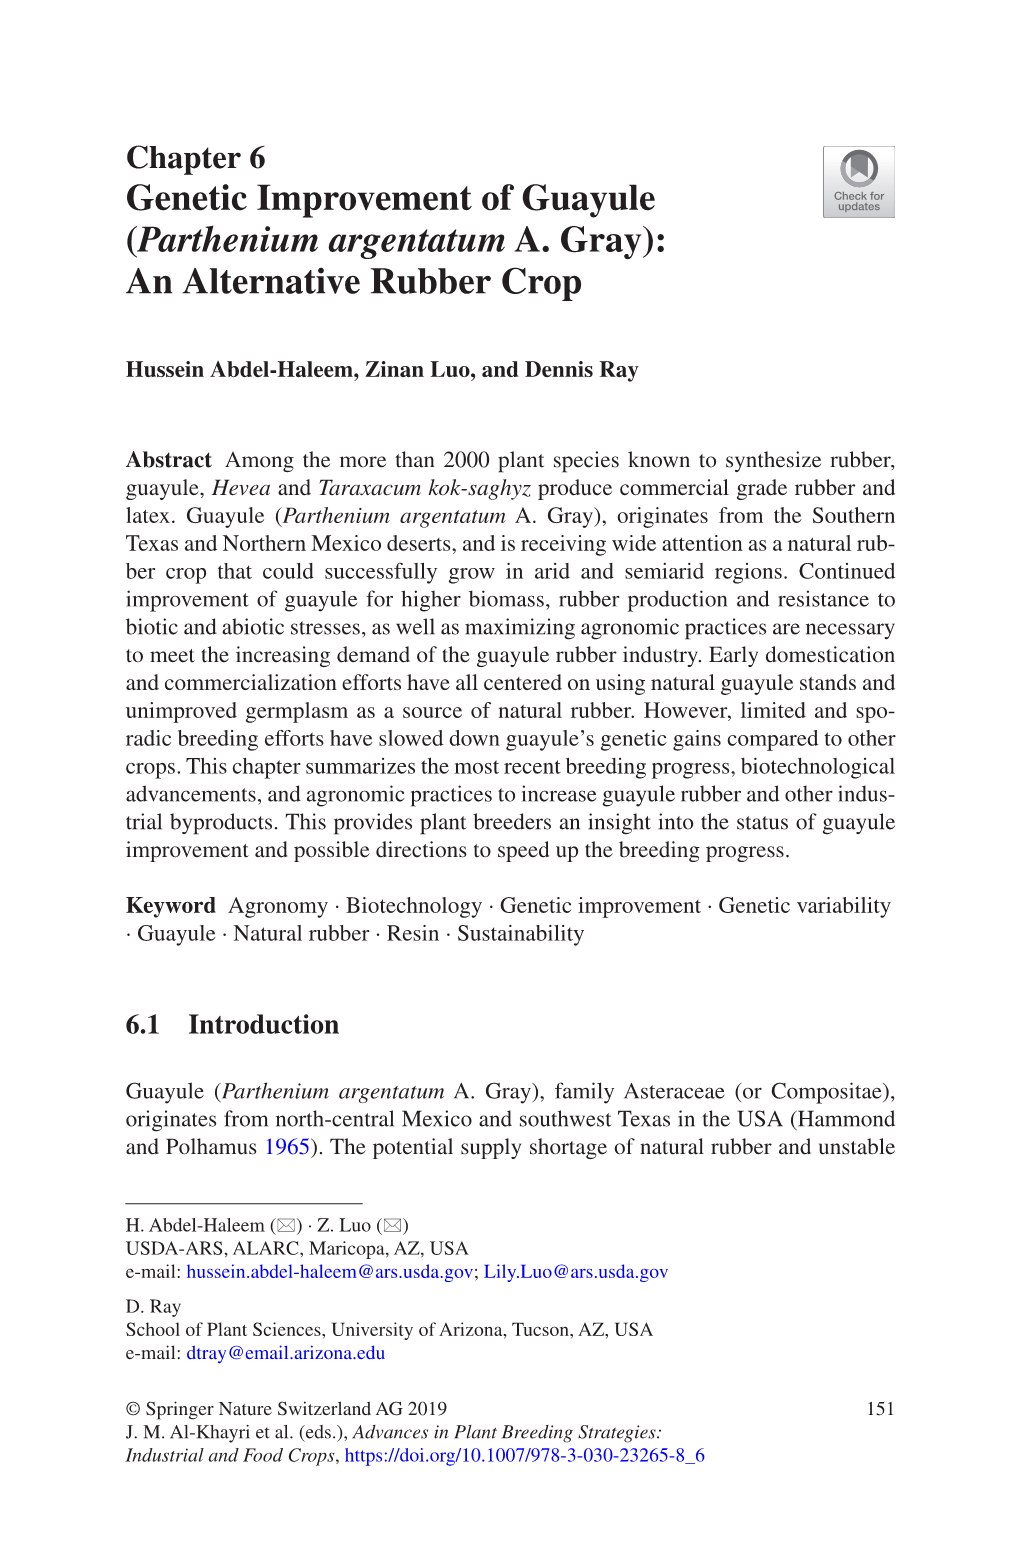 Genetic Improvement of Guayule (Parthenium Argentatum A. Gray): an Alternative Rubber Crop